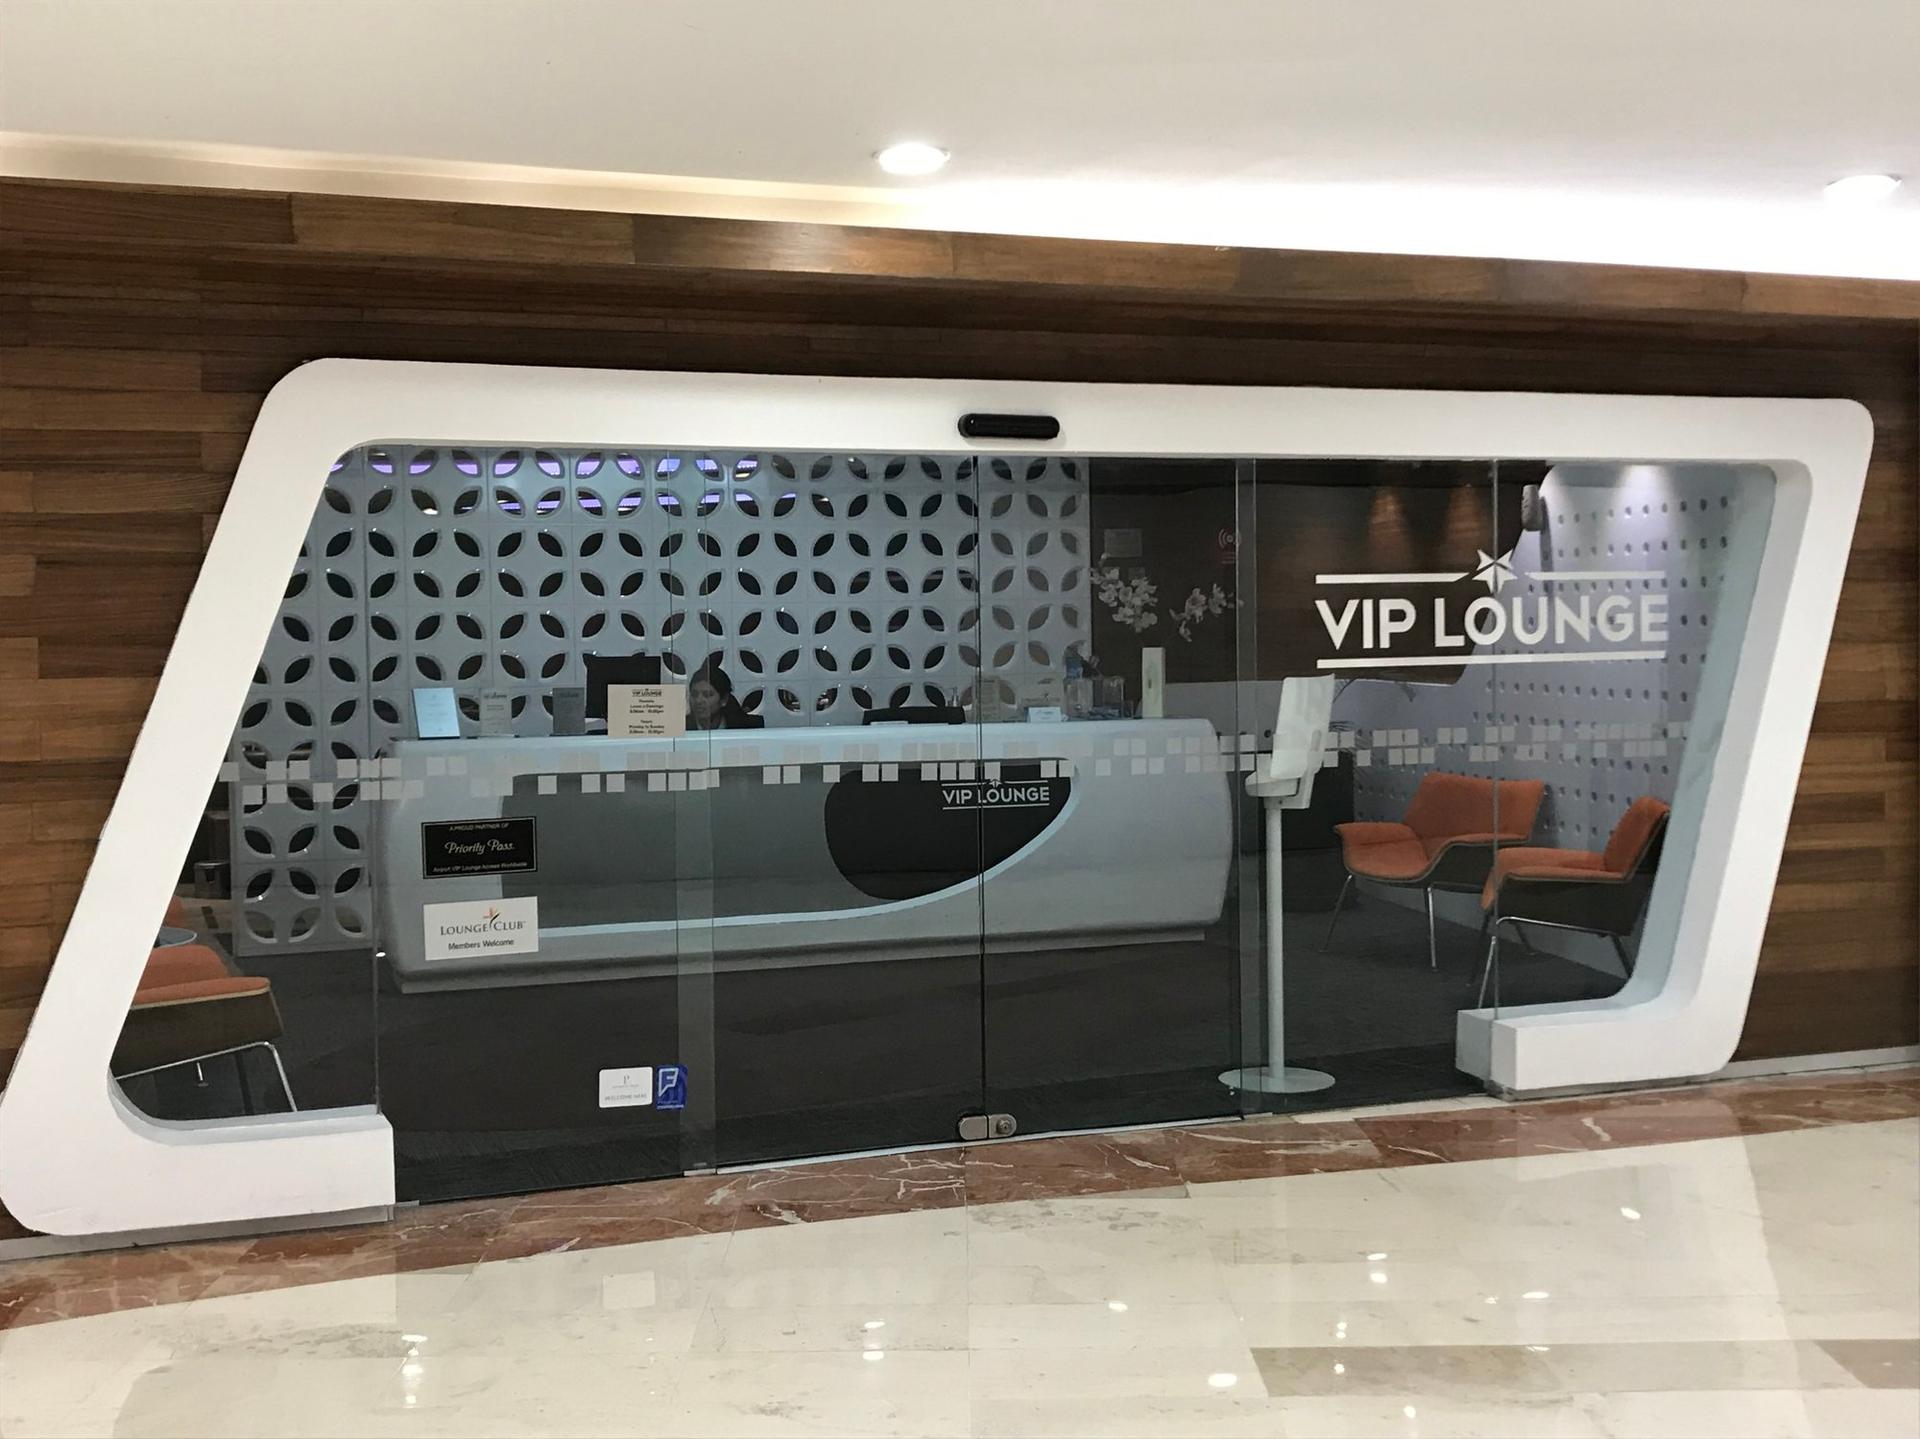 VIP Lounge (East) image 8 of 10